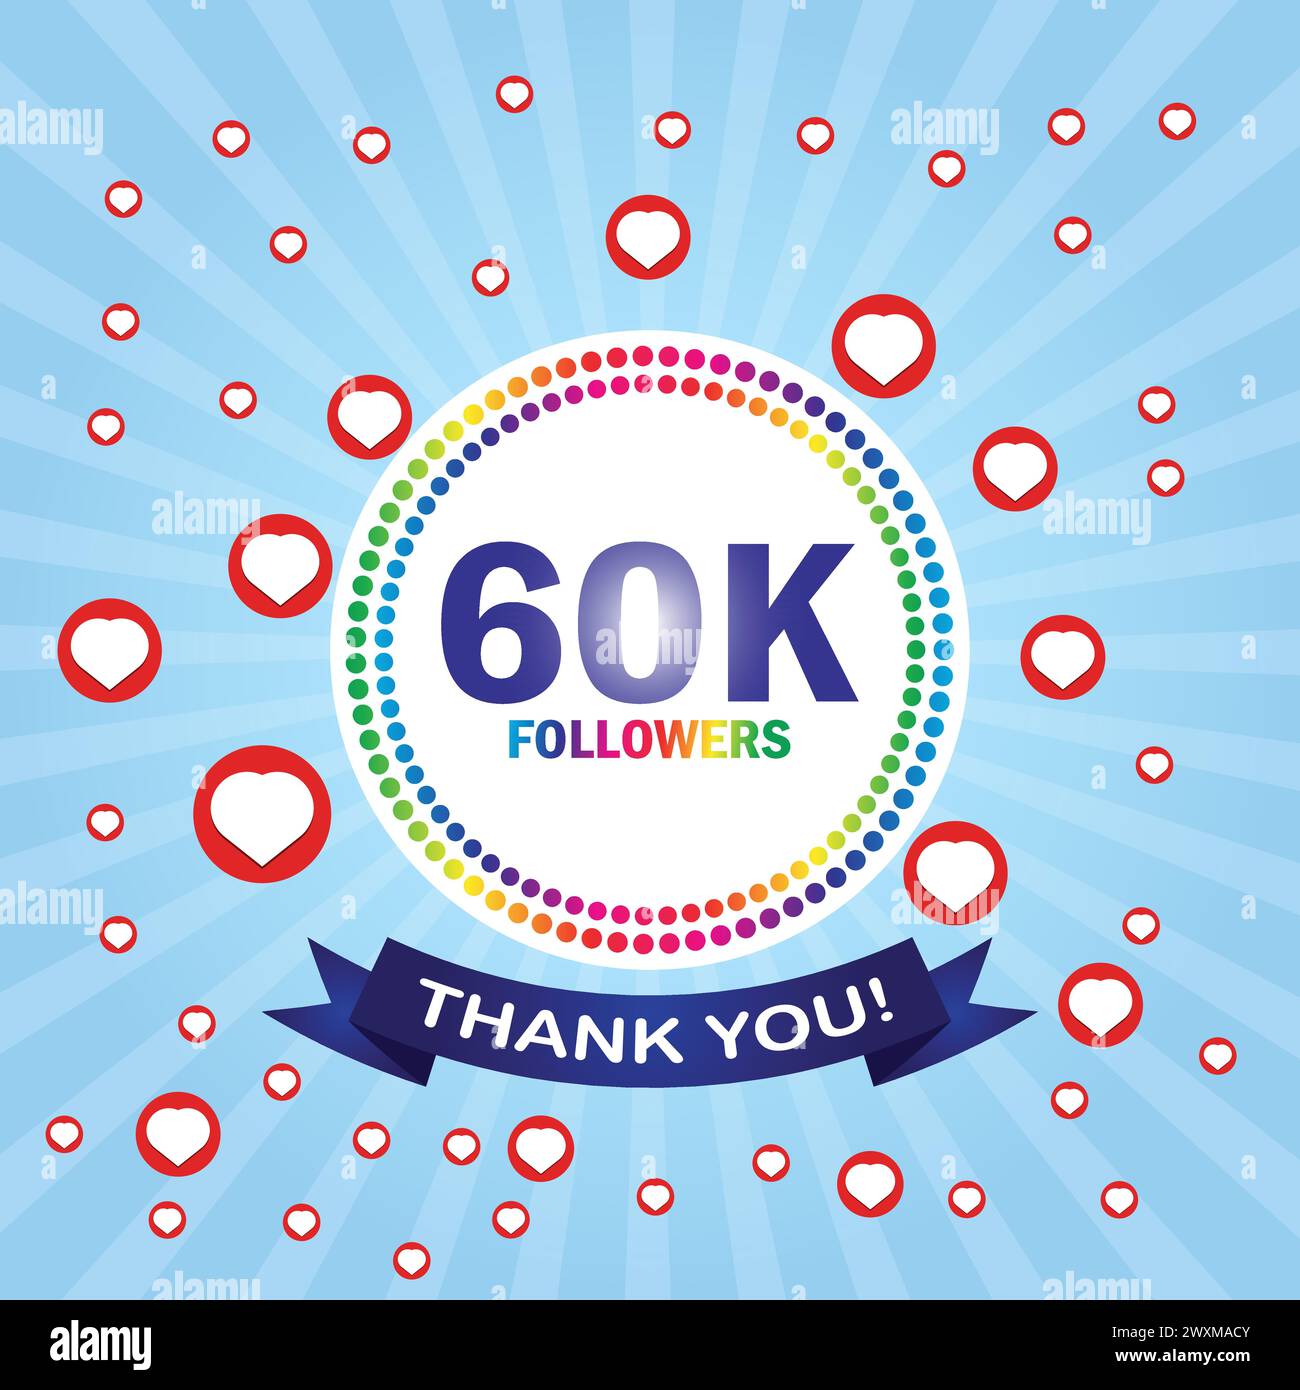 Dankeschön 60 Follower Karte. Vektor-Illustration für soziale Netzwerke, Social Sites Post, Grußkarte Stock Vektor